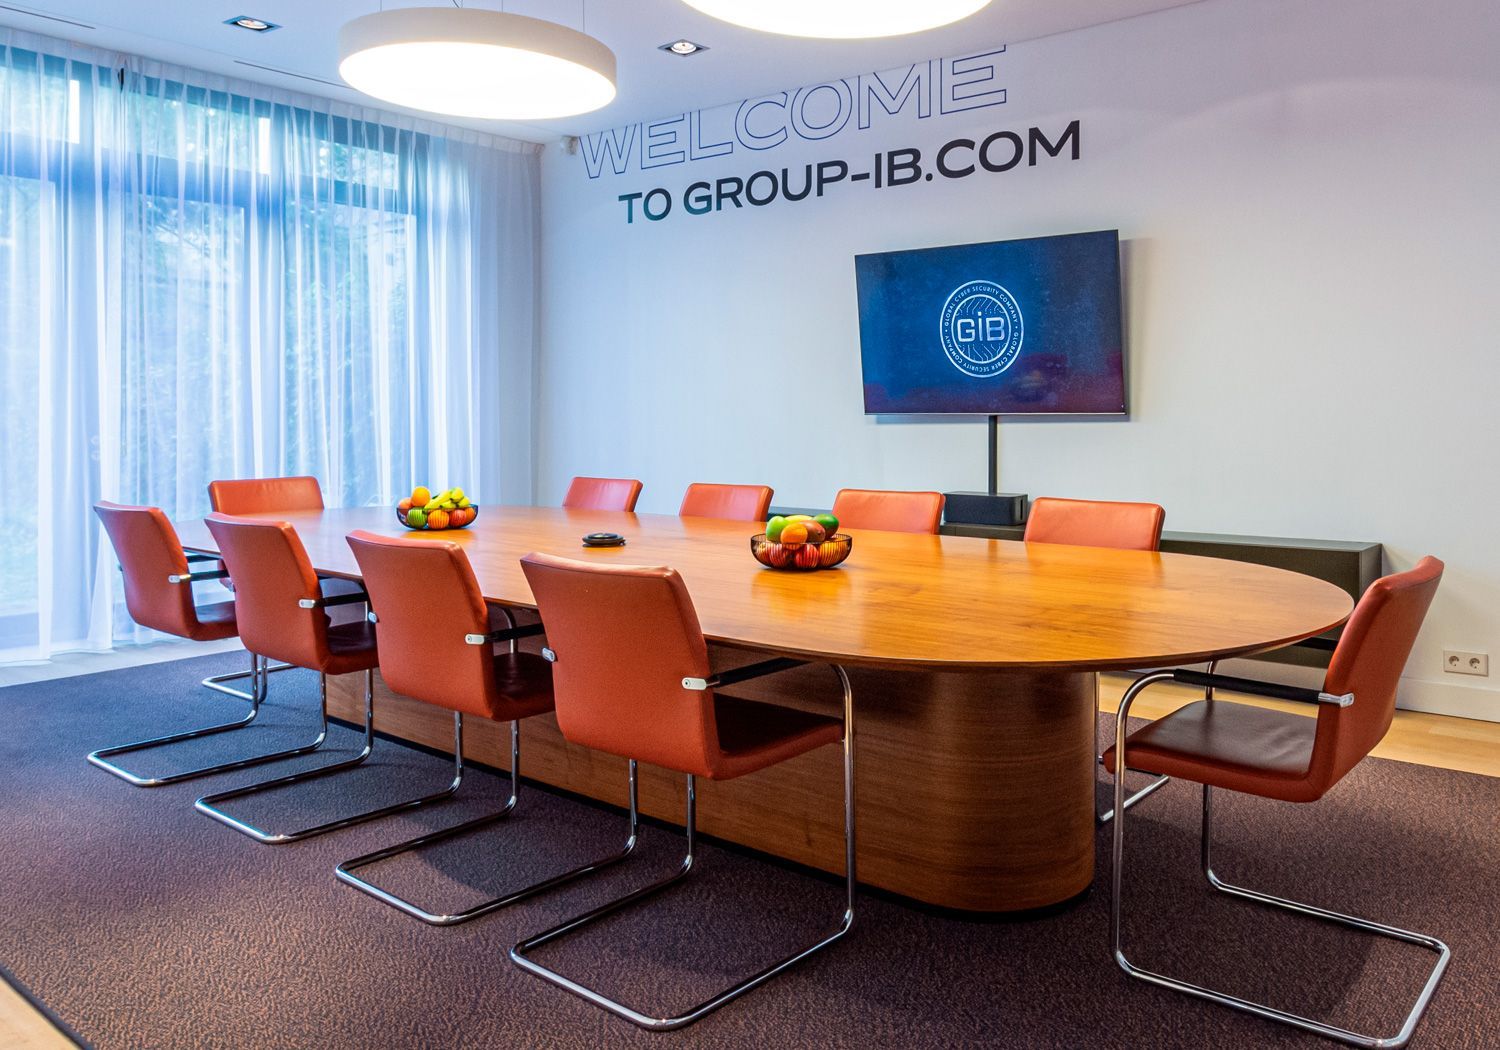 Group IB Settles European HeadQuarters in Amsterdam 